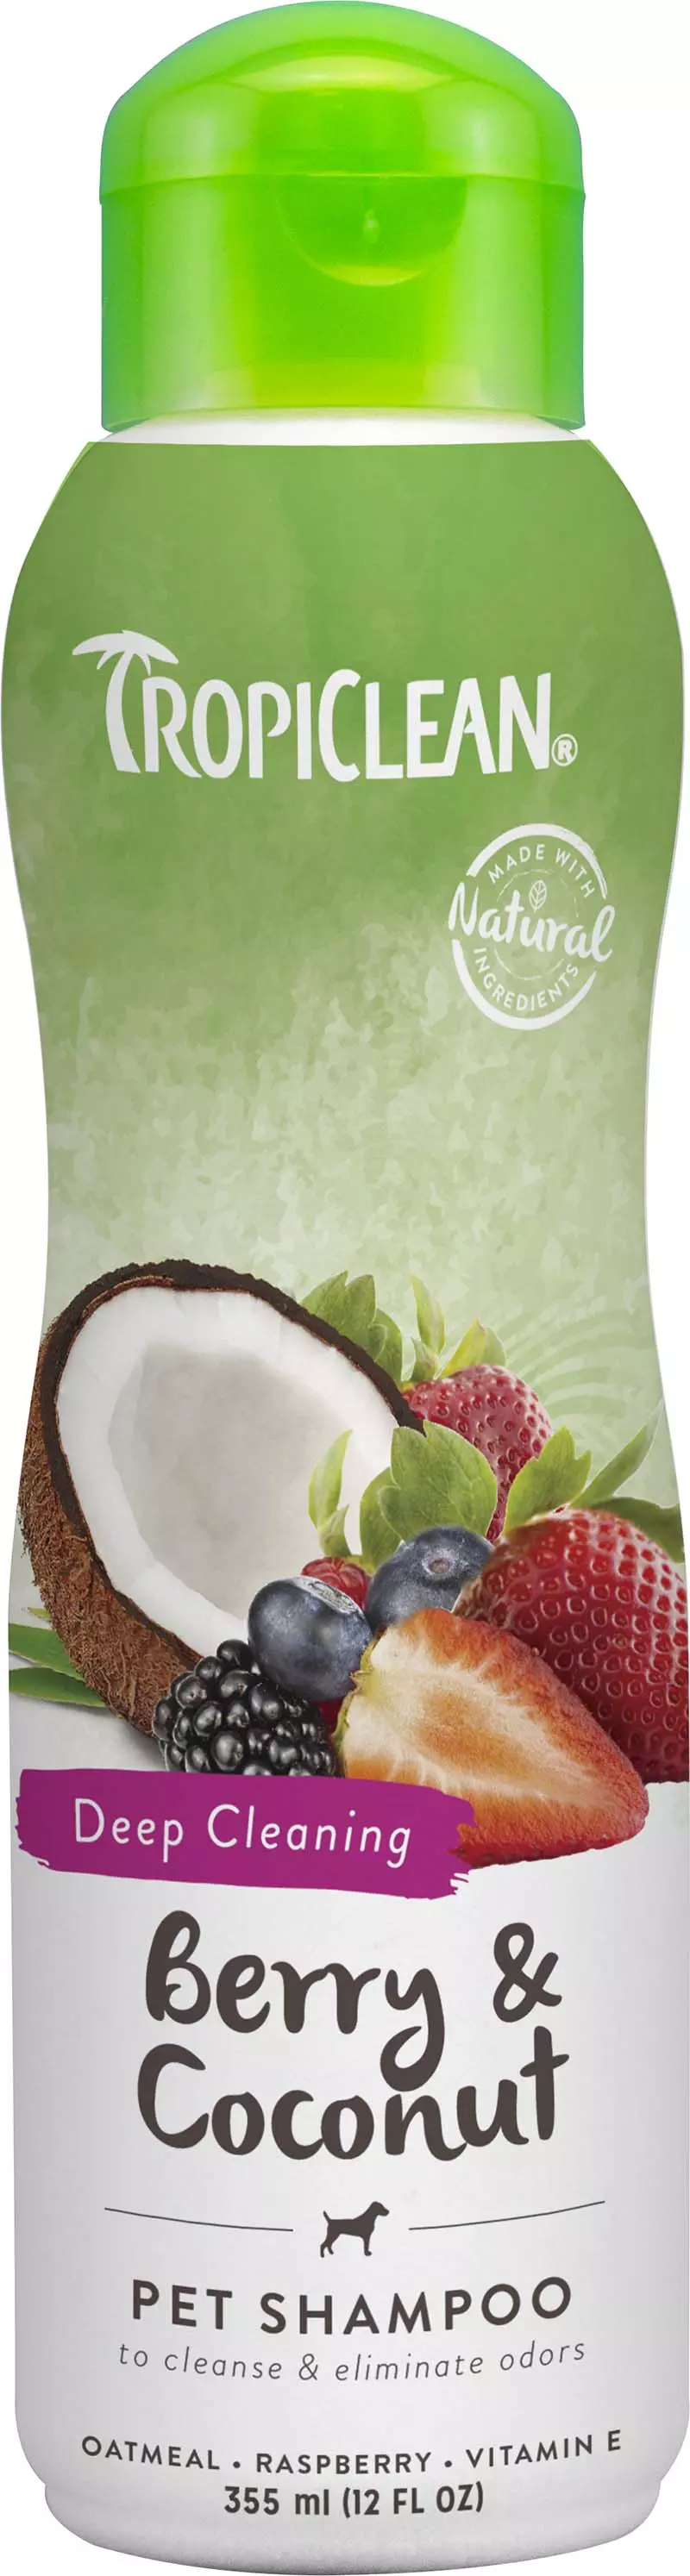 Tropiclean Berrycoconut Shampoo 355Ml .2100